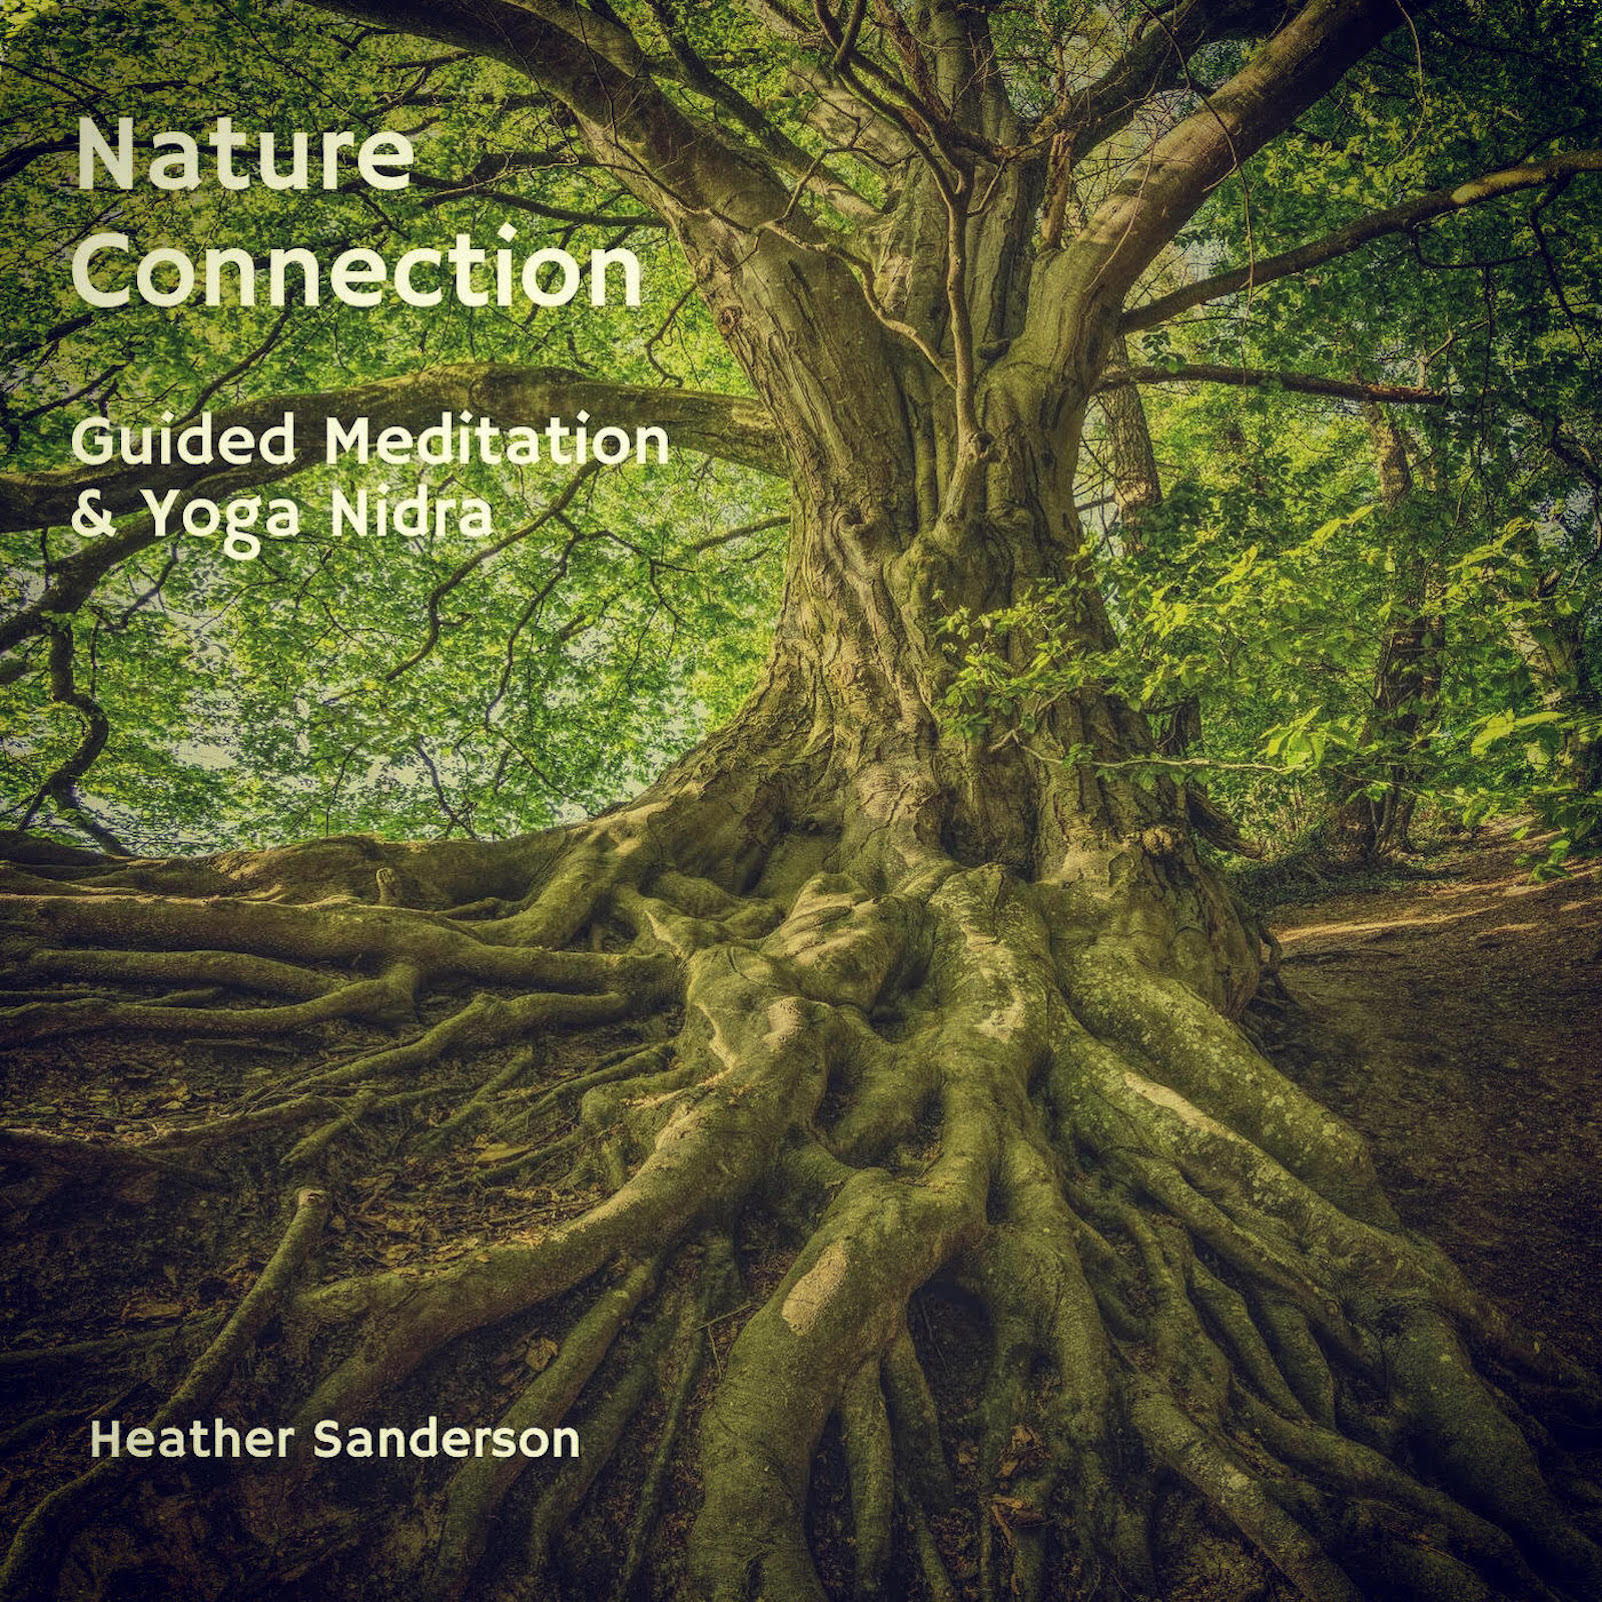 Nature Connection Album